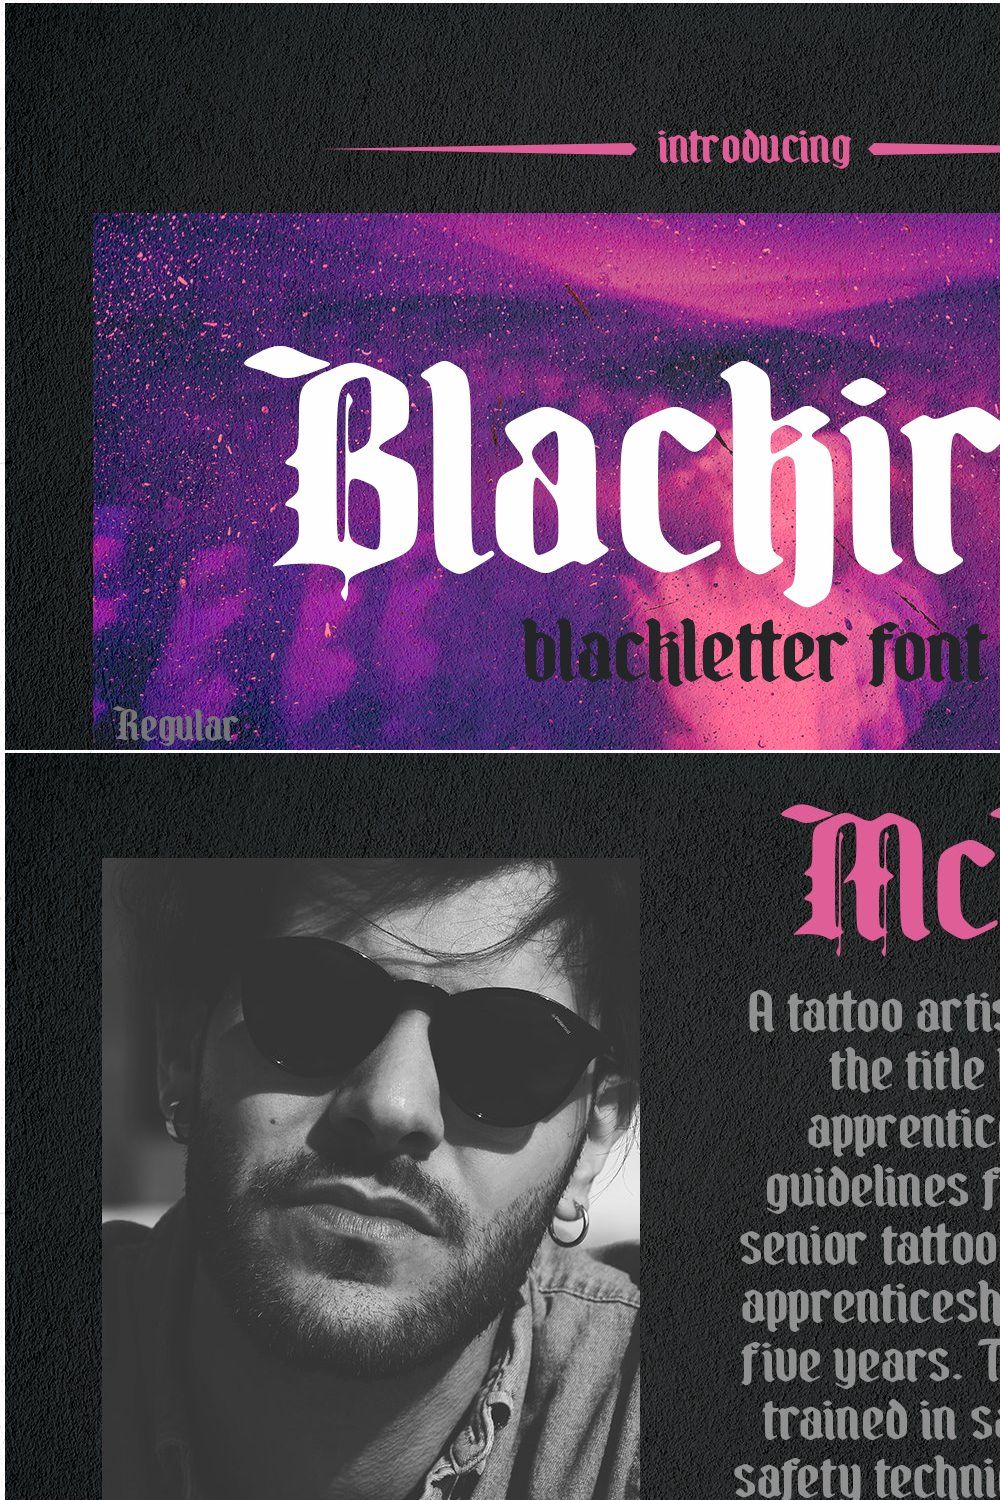 Blackiron - Blackletter Font pinterest preview image.